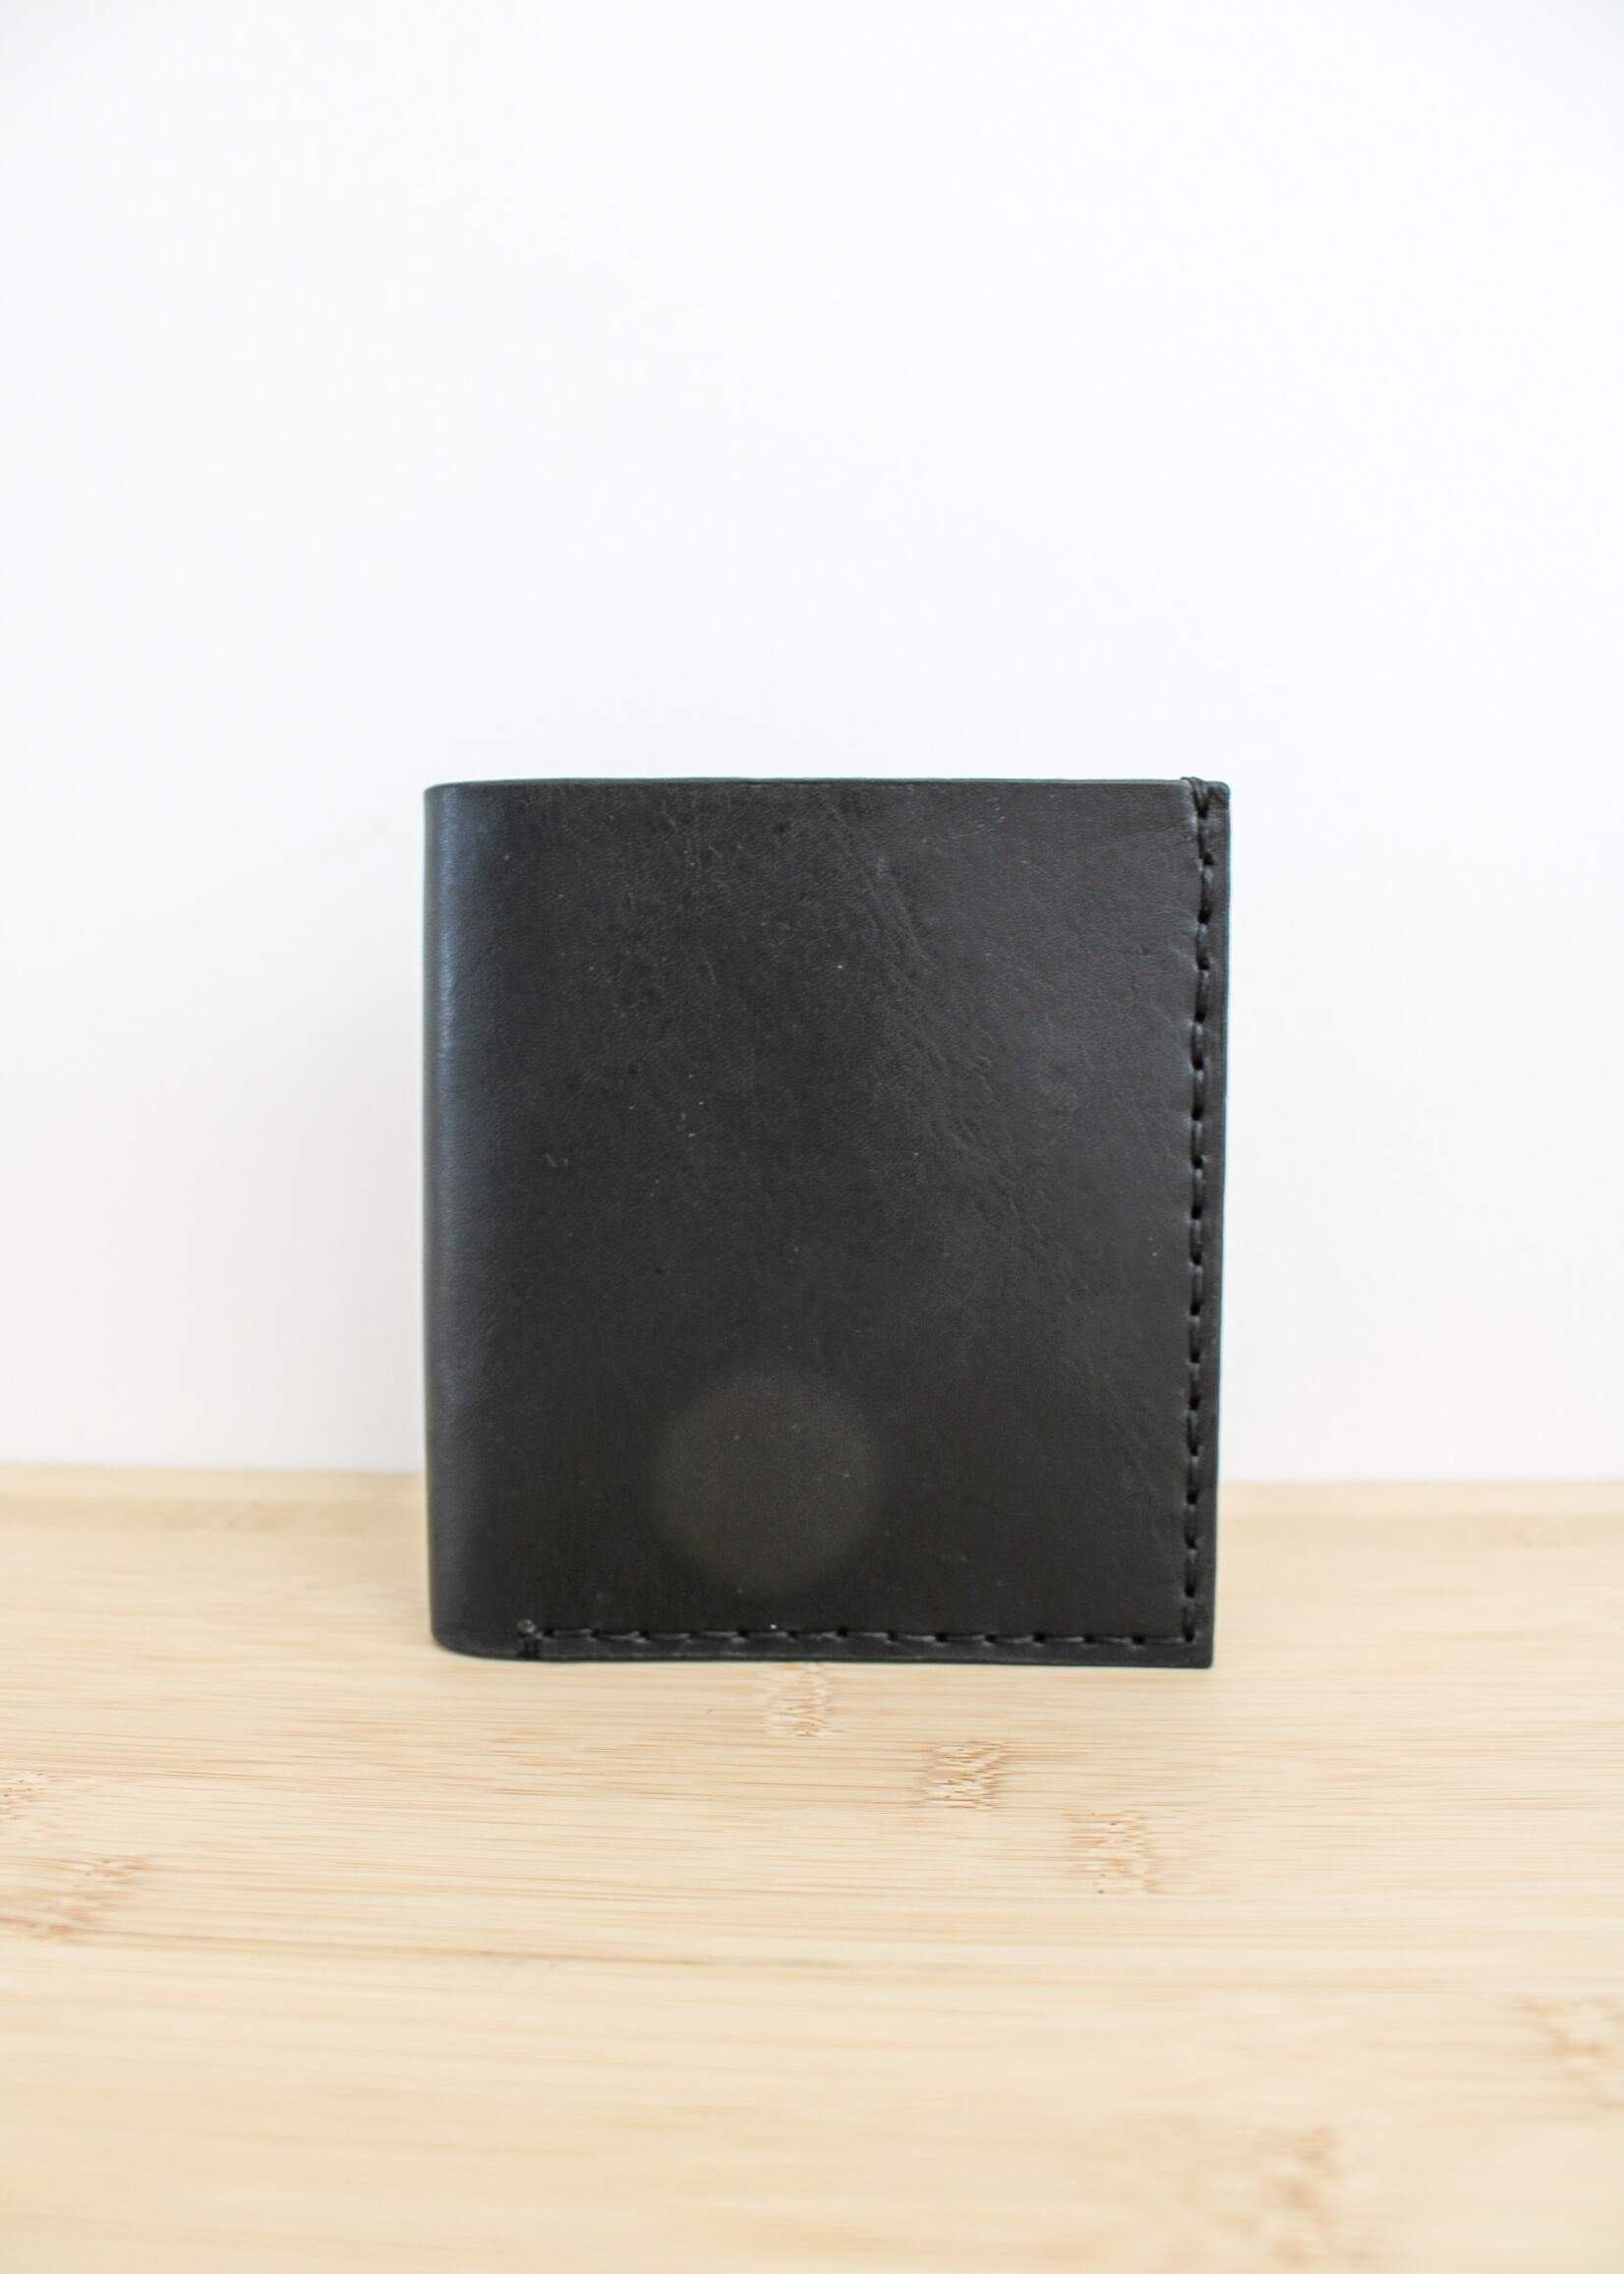 ACCESSORIES (M) -Wallet, Black leather, Ukraine